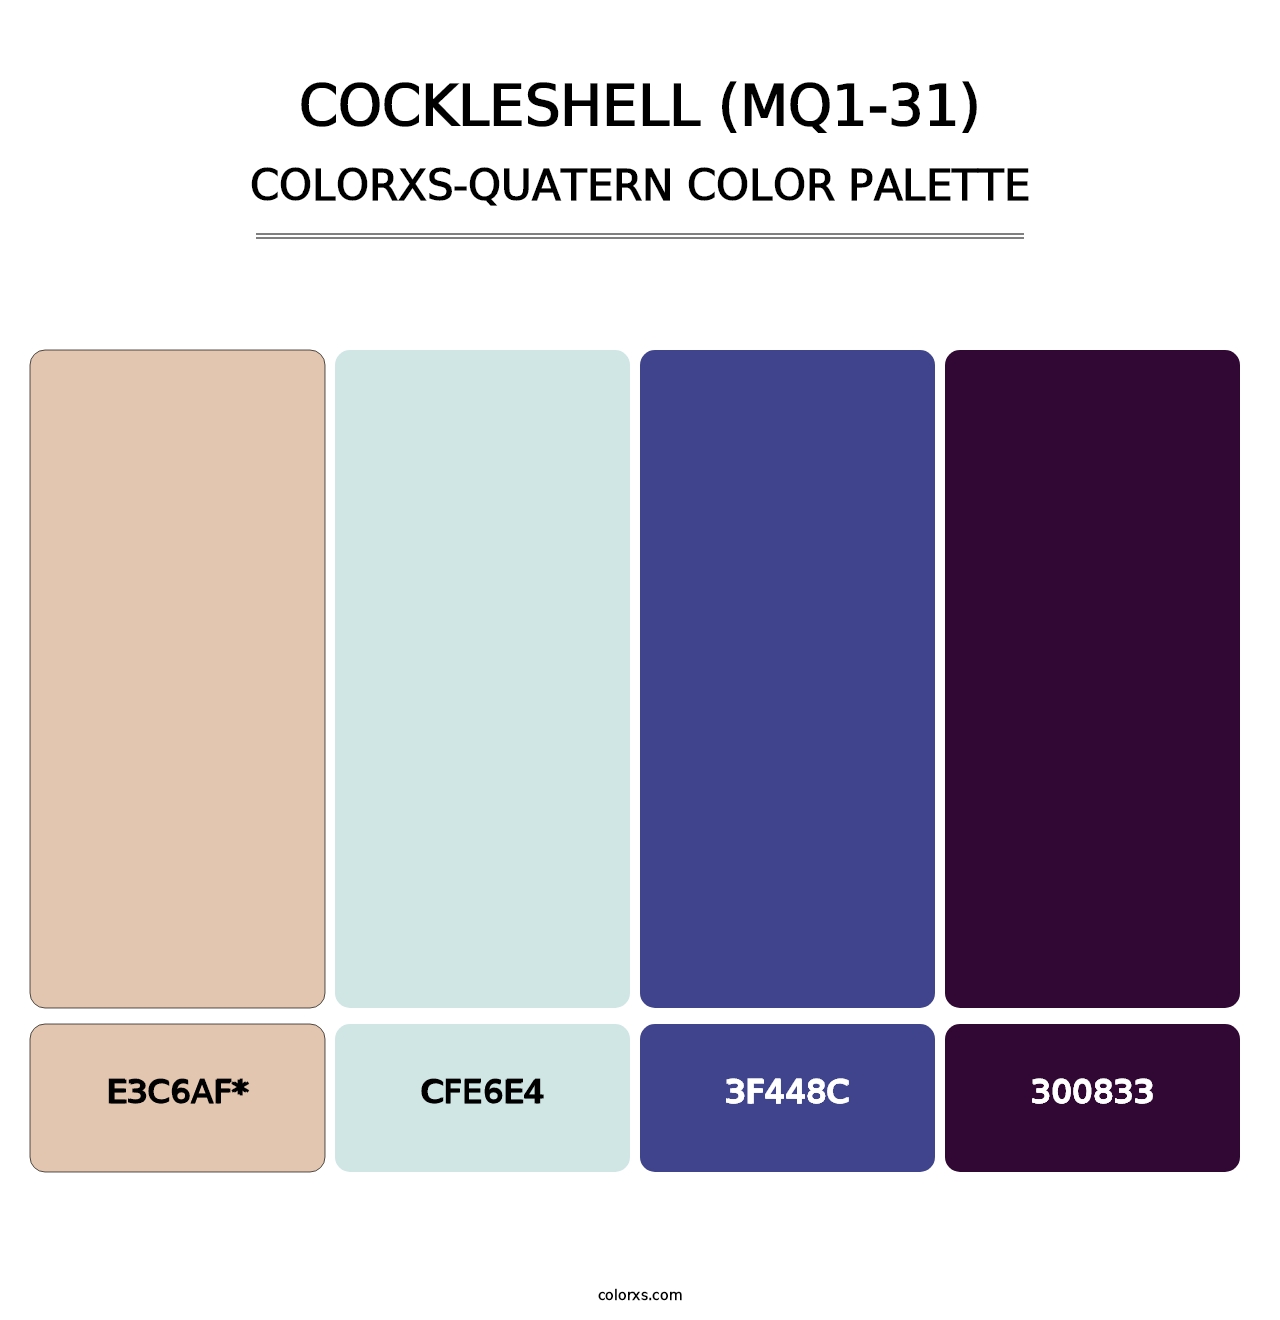 Cockleshell (MQ1-31) - Colorxs Quad Palette